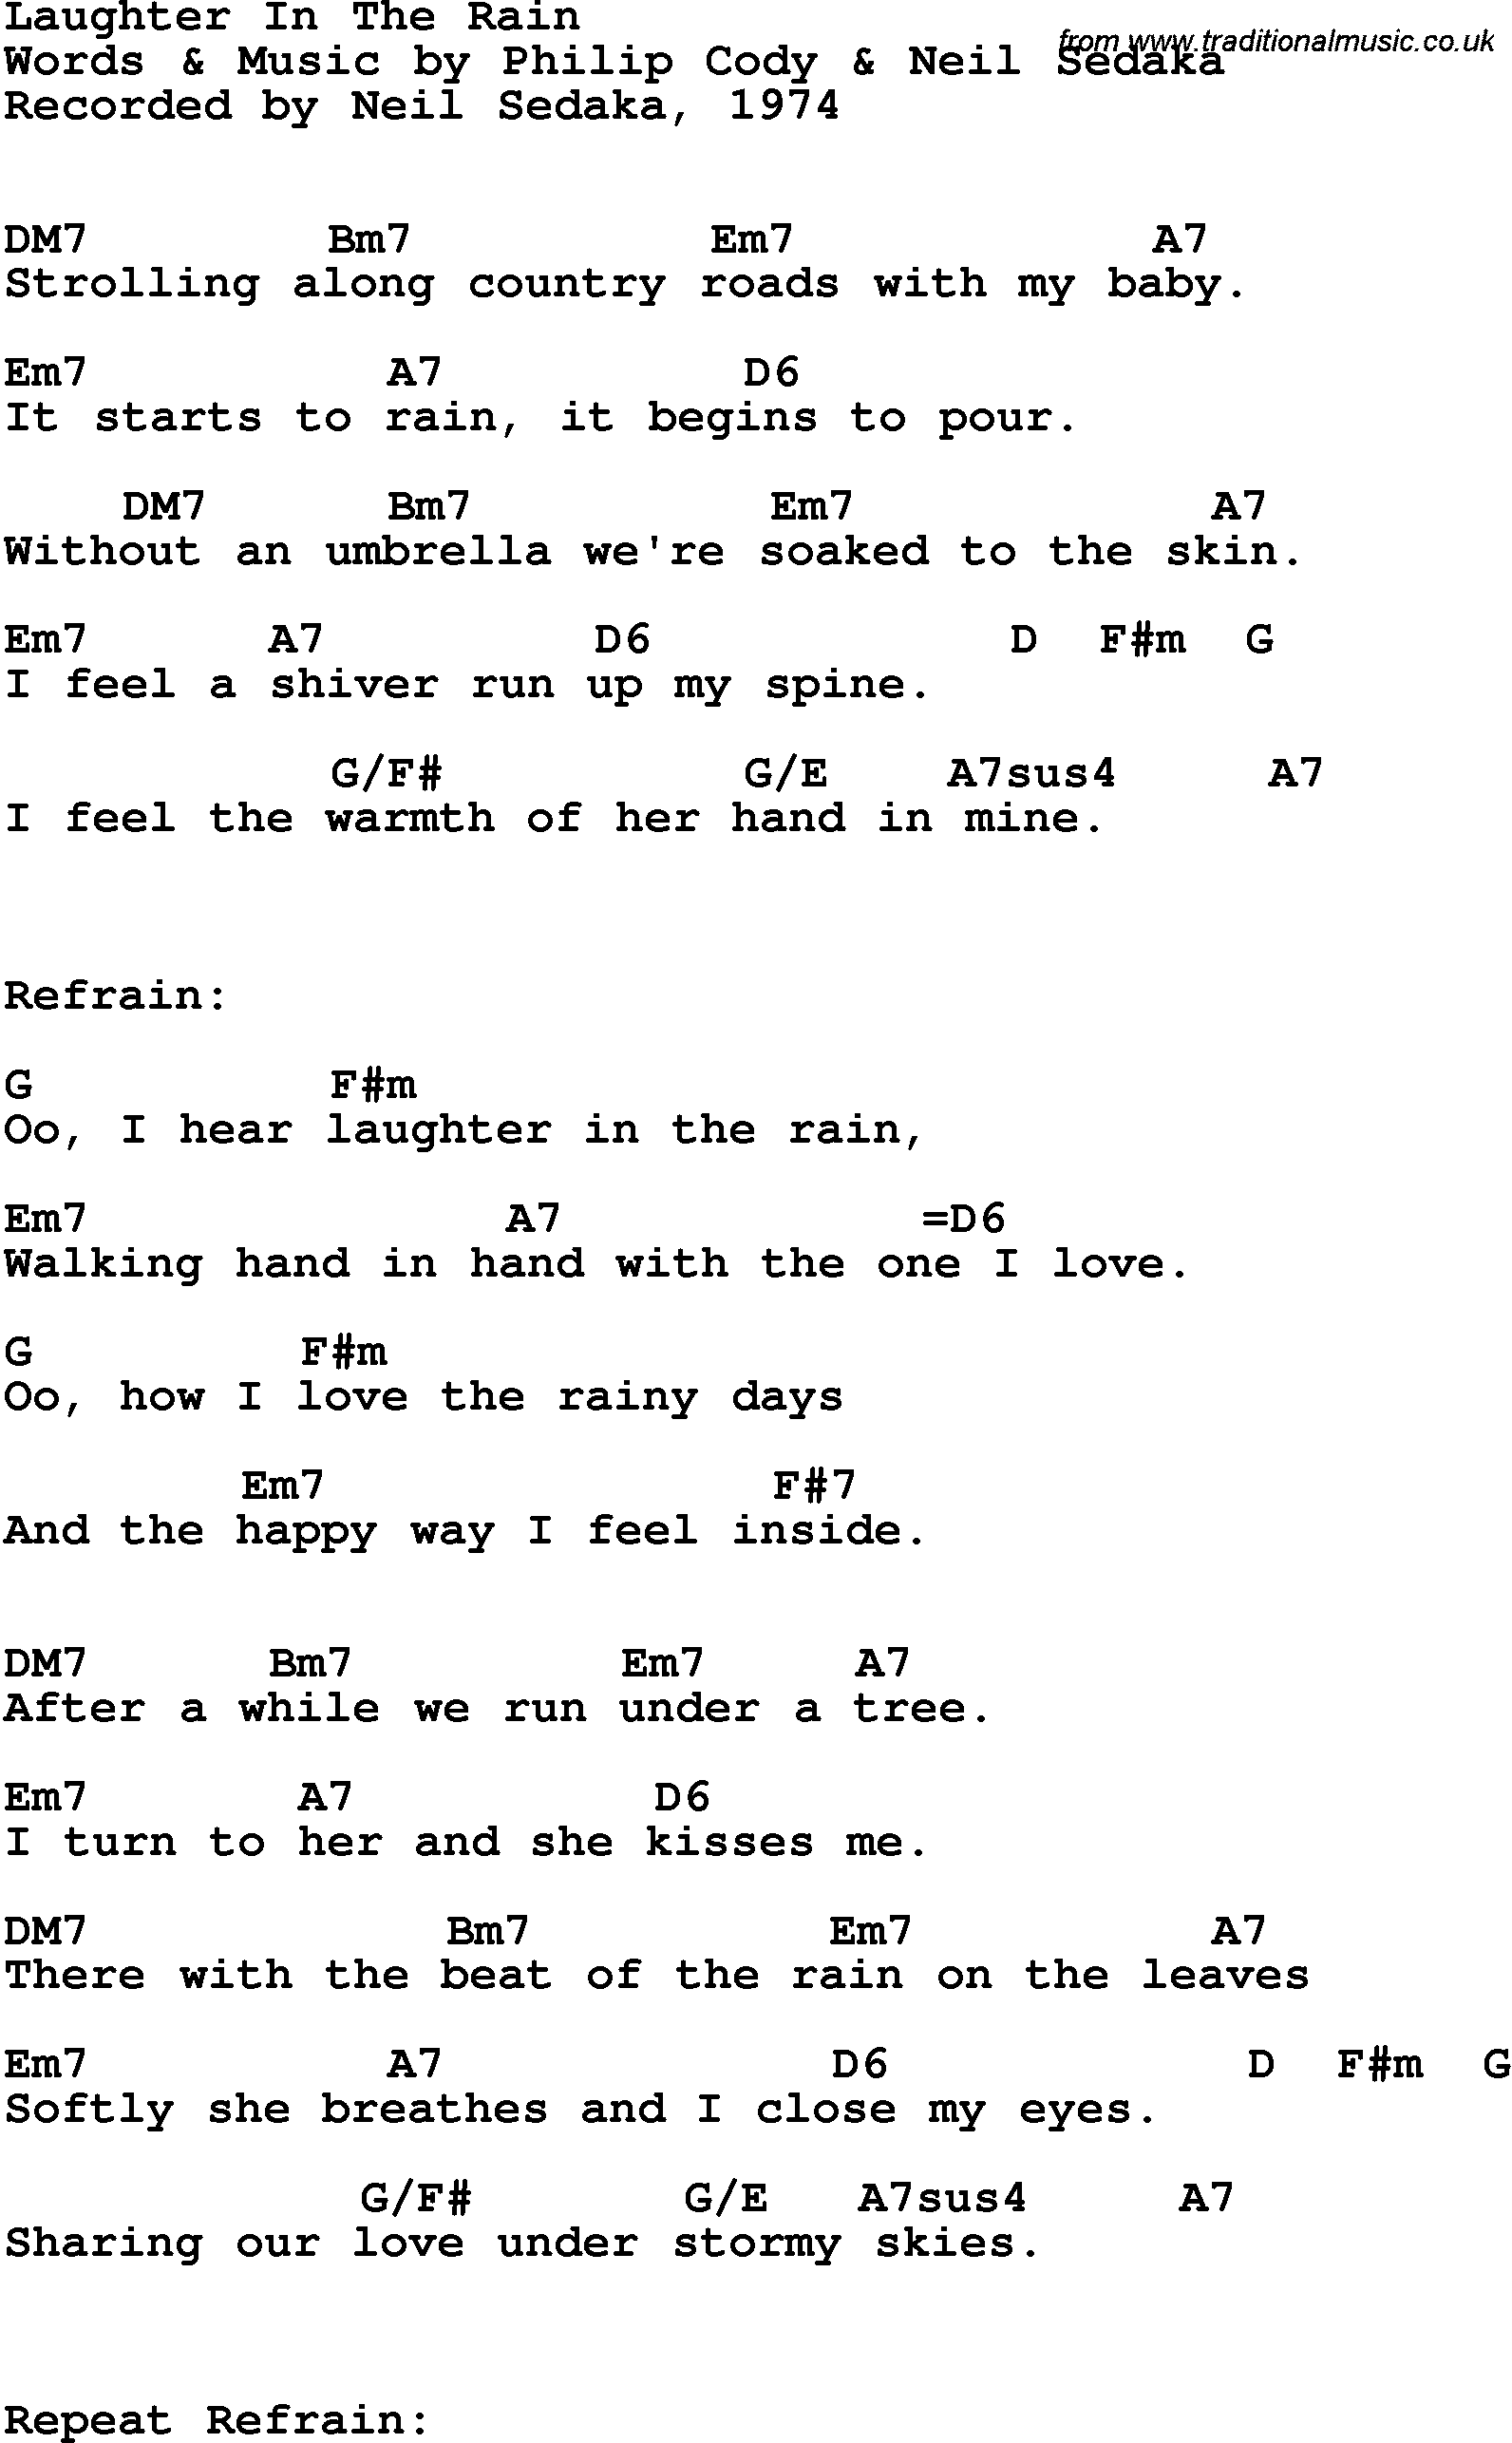 Song Lyrics with guitar chords for Laughter In The Rain - Neil Sedaka, 1974